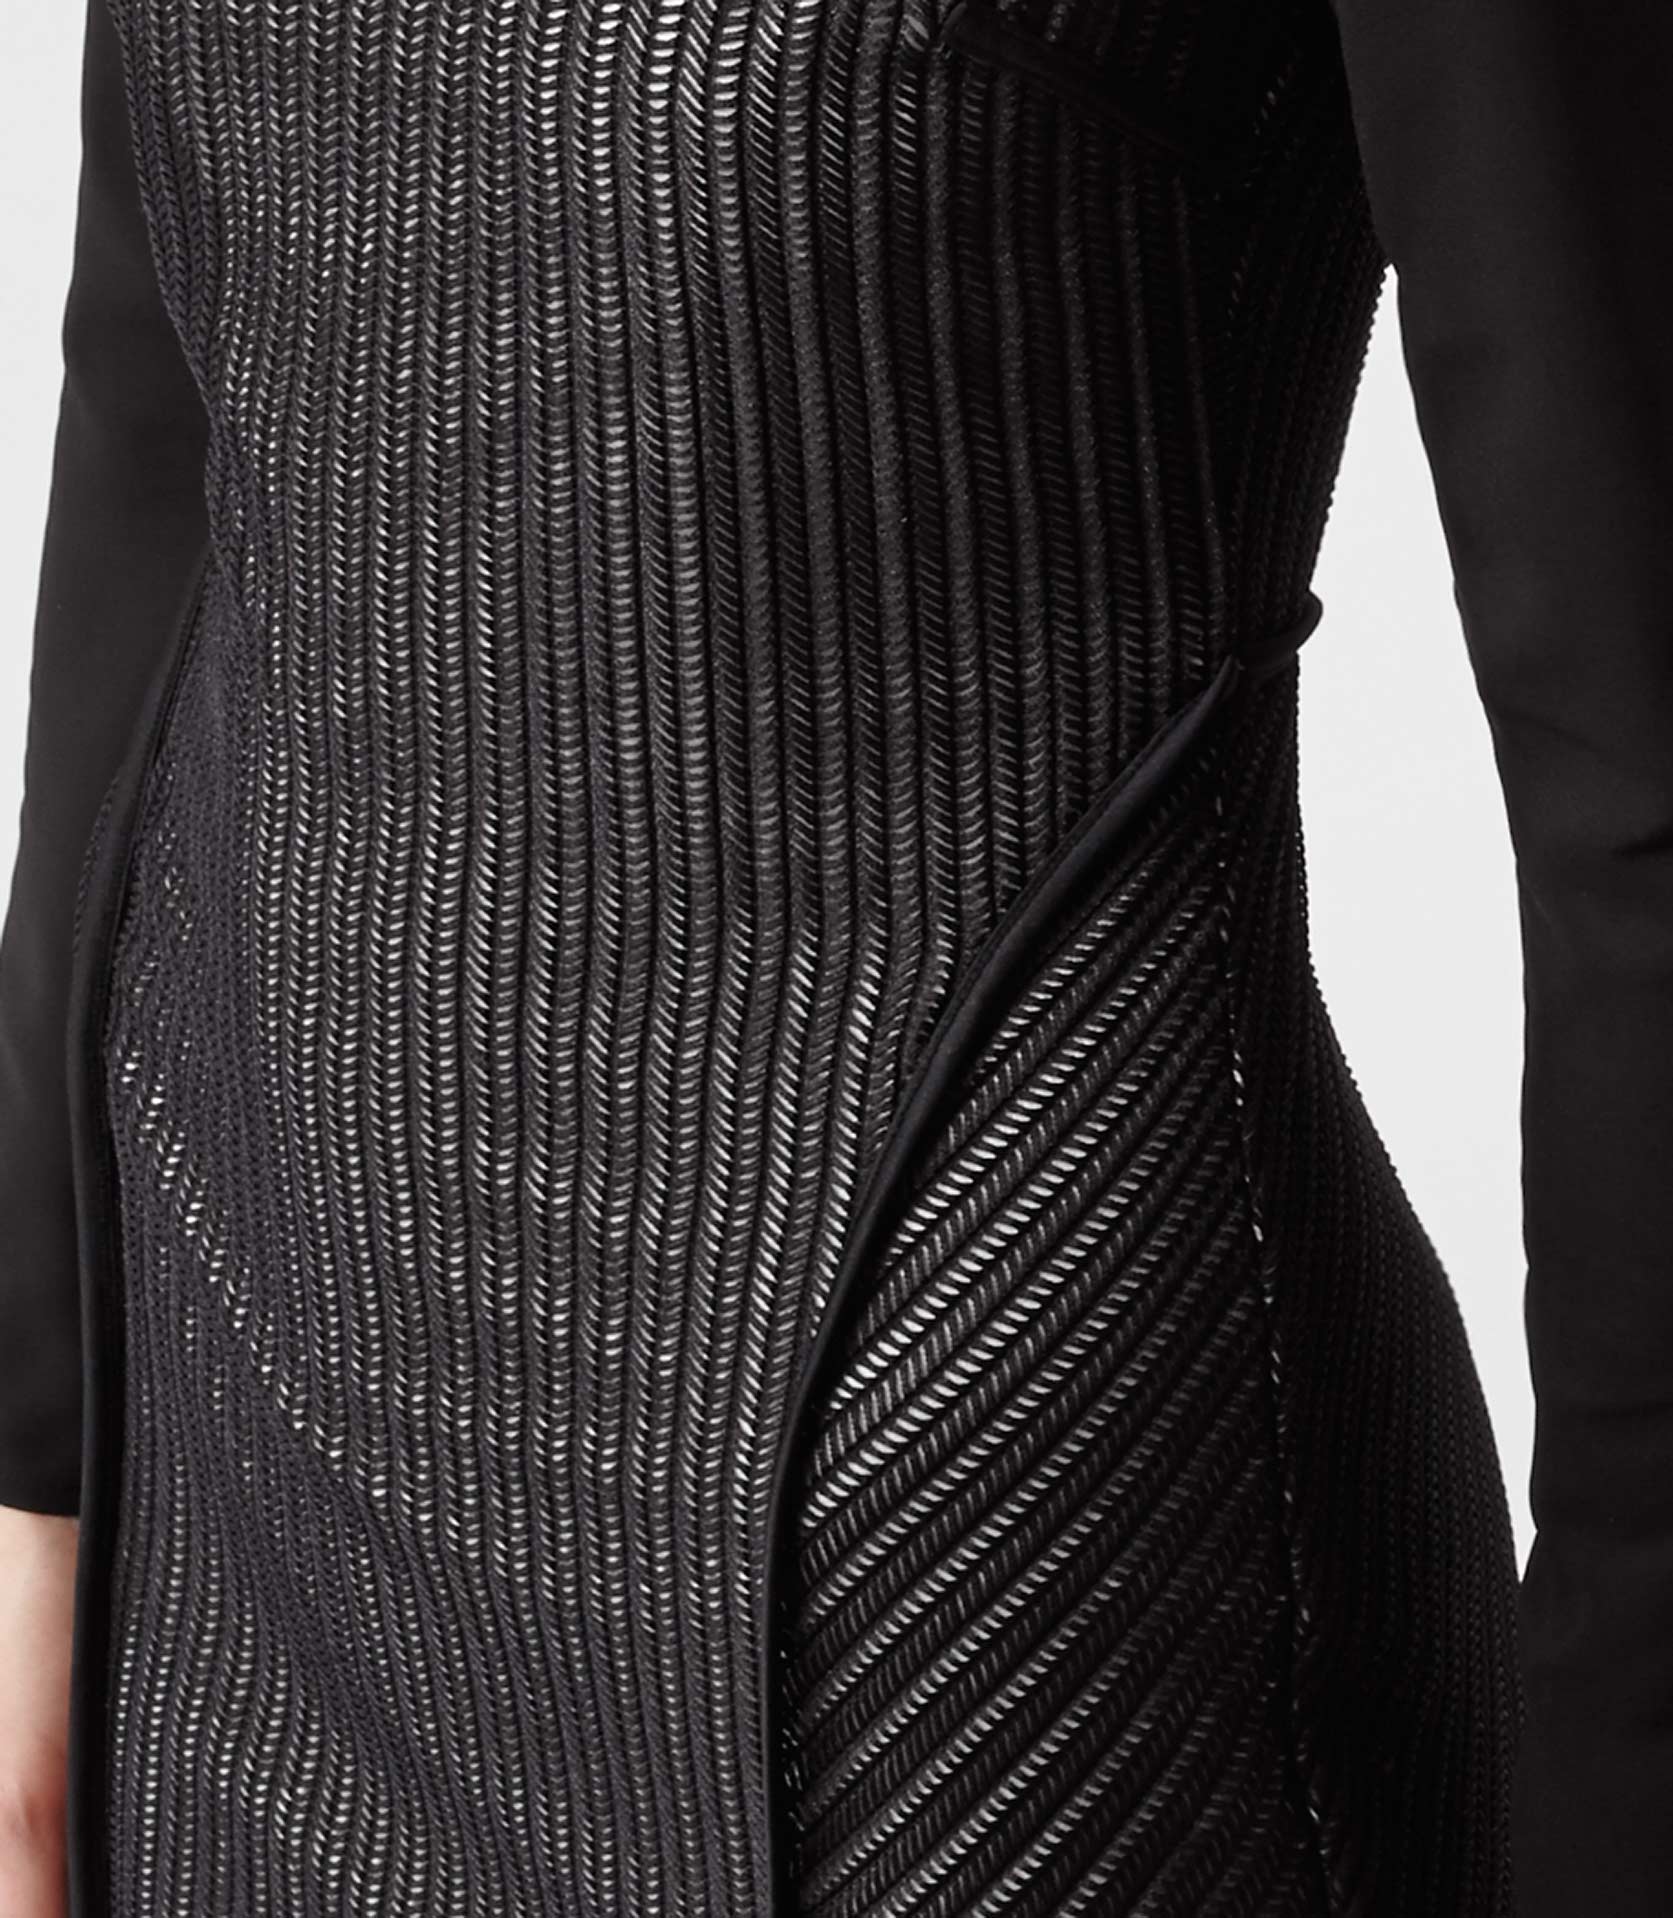 Reiss Chloe Bodycon Sheer Sleeve Dress in Black/Cream (Natural) - Lyst